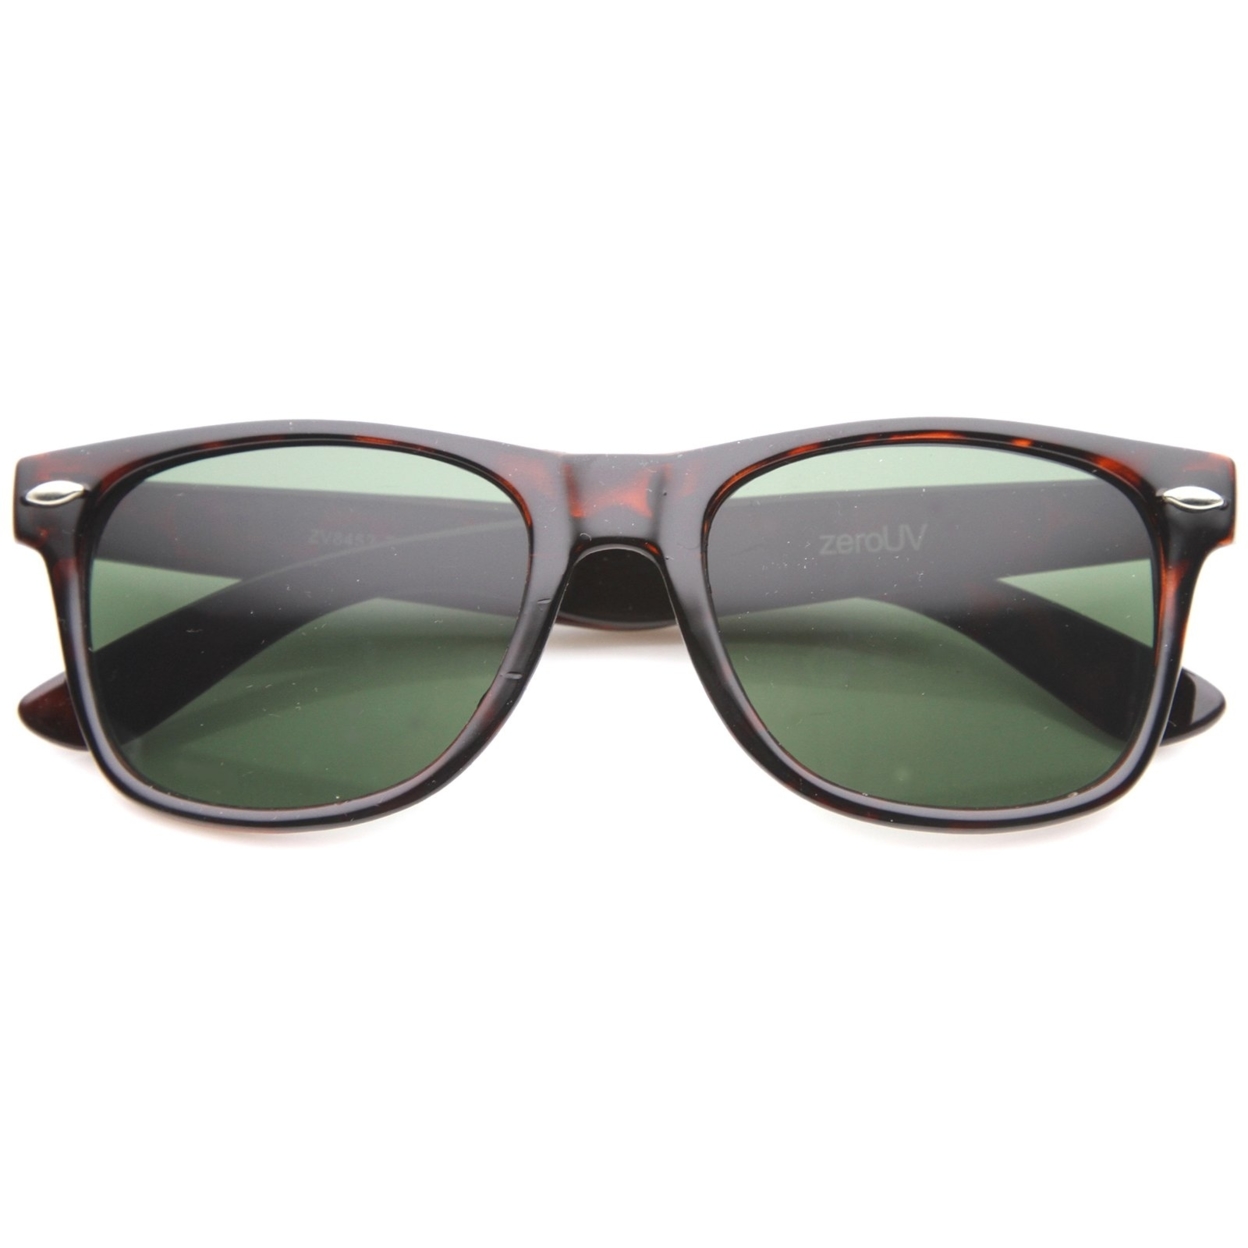 Classic Eyewear Iconic 80's Retro Large Horn Rimmed Sunglasses 54mm - Tortoise / Green